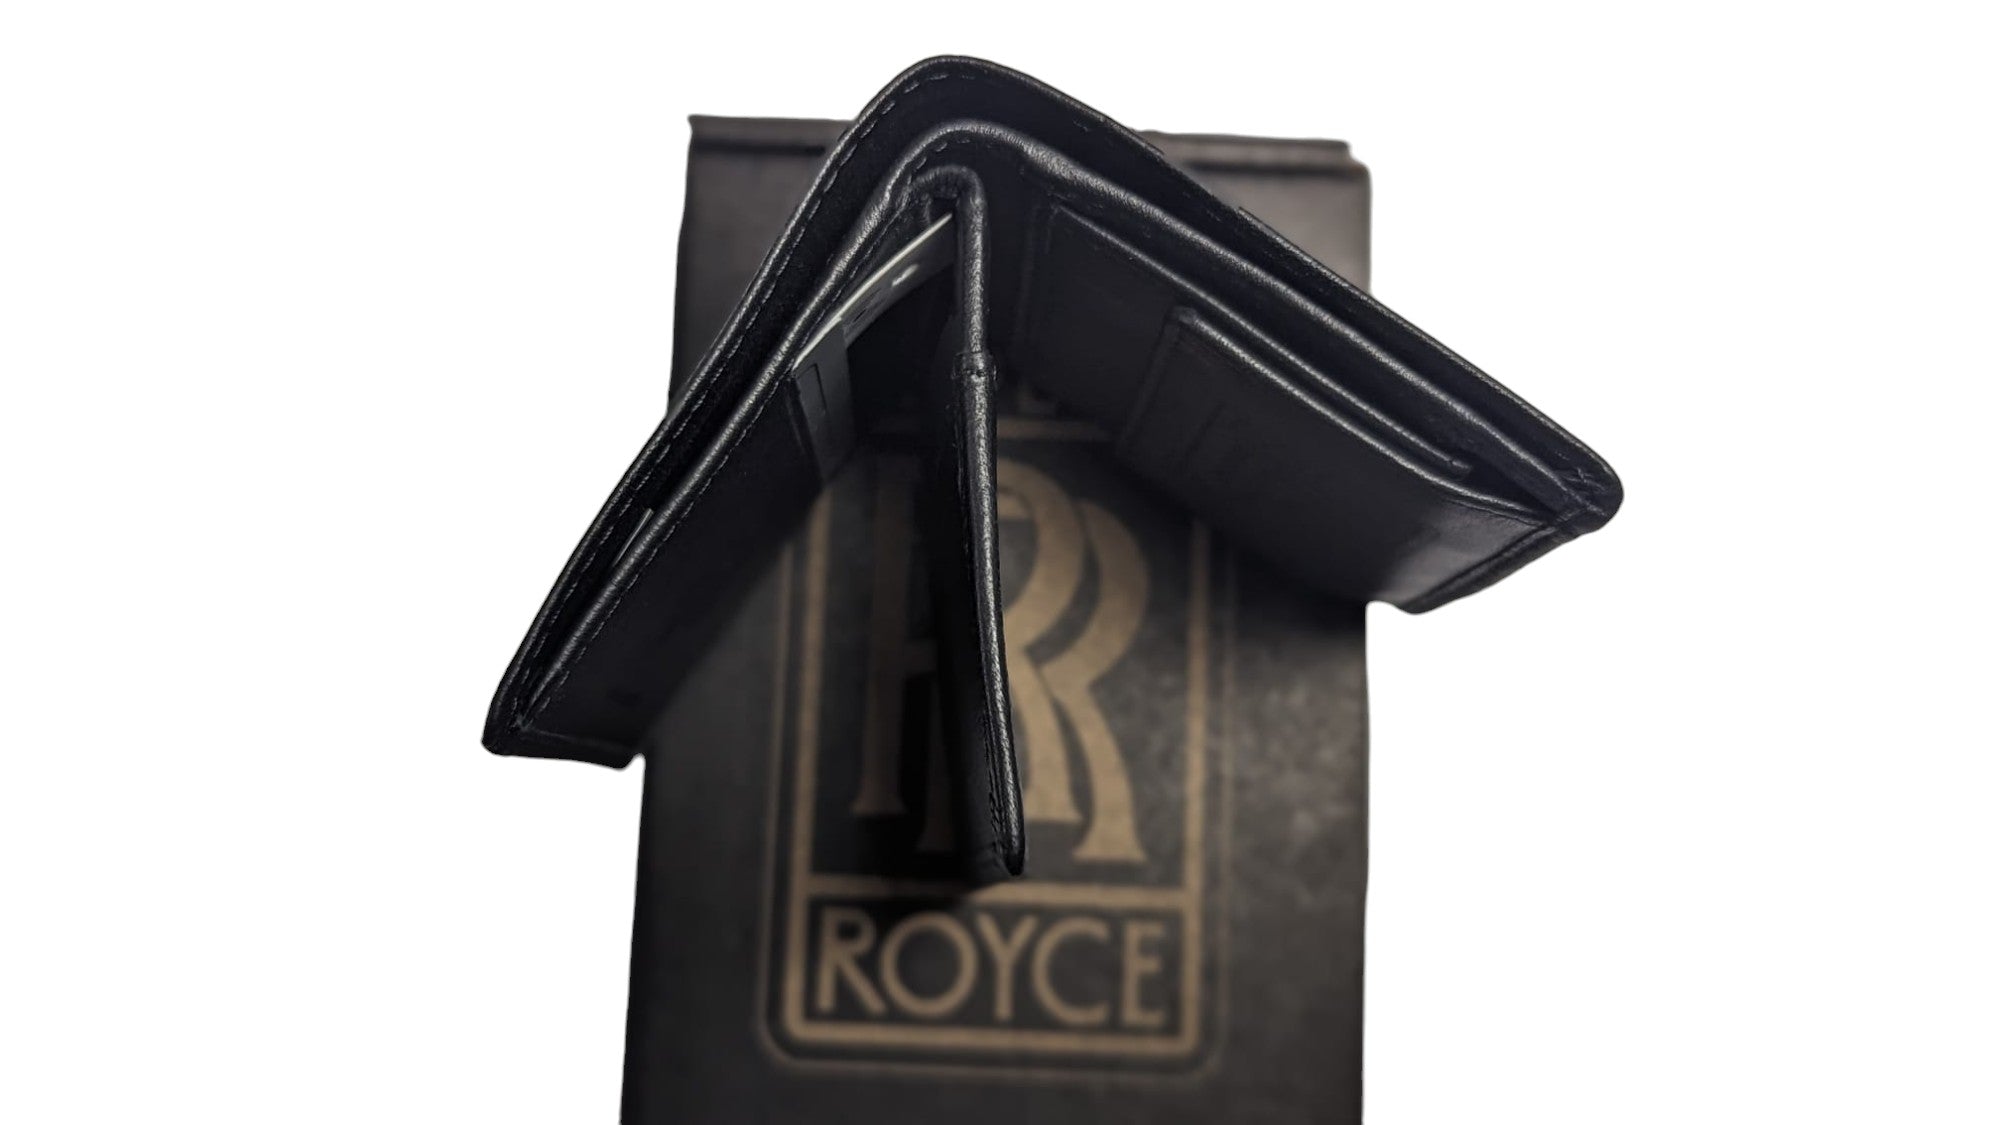 Premium Nappa Genuine Leather, Rolls Royce Bi Fold Wallet Swolit RFID Blocker Gift Boxed